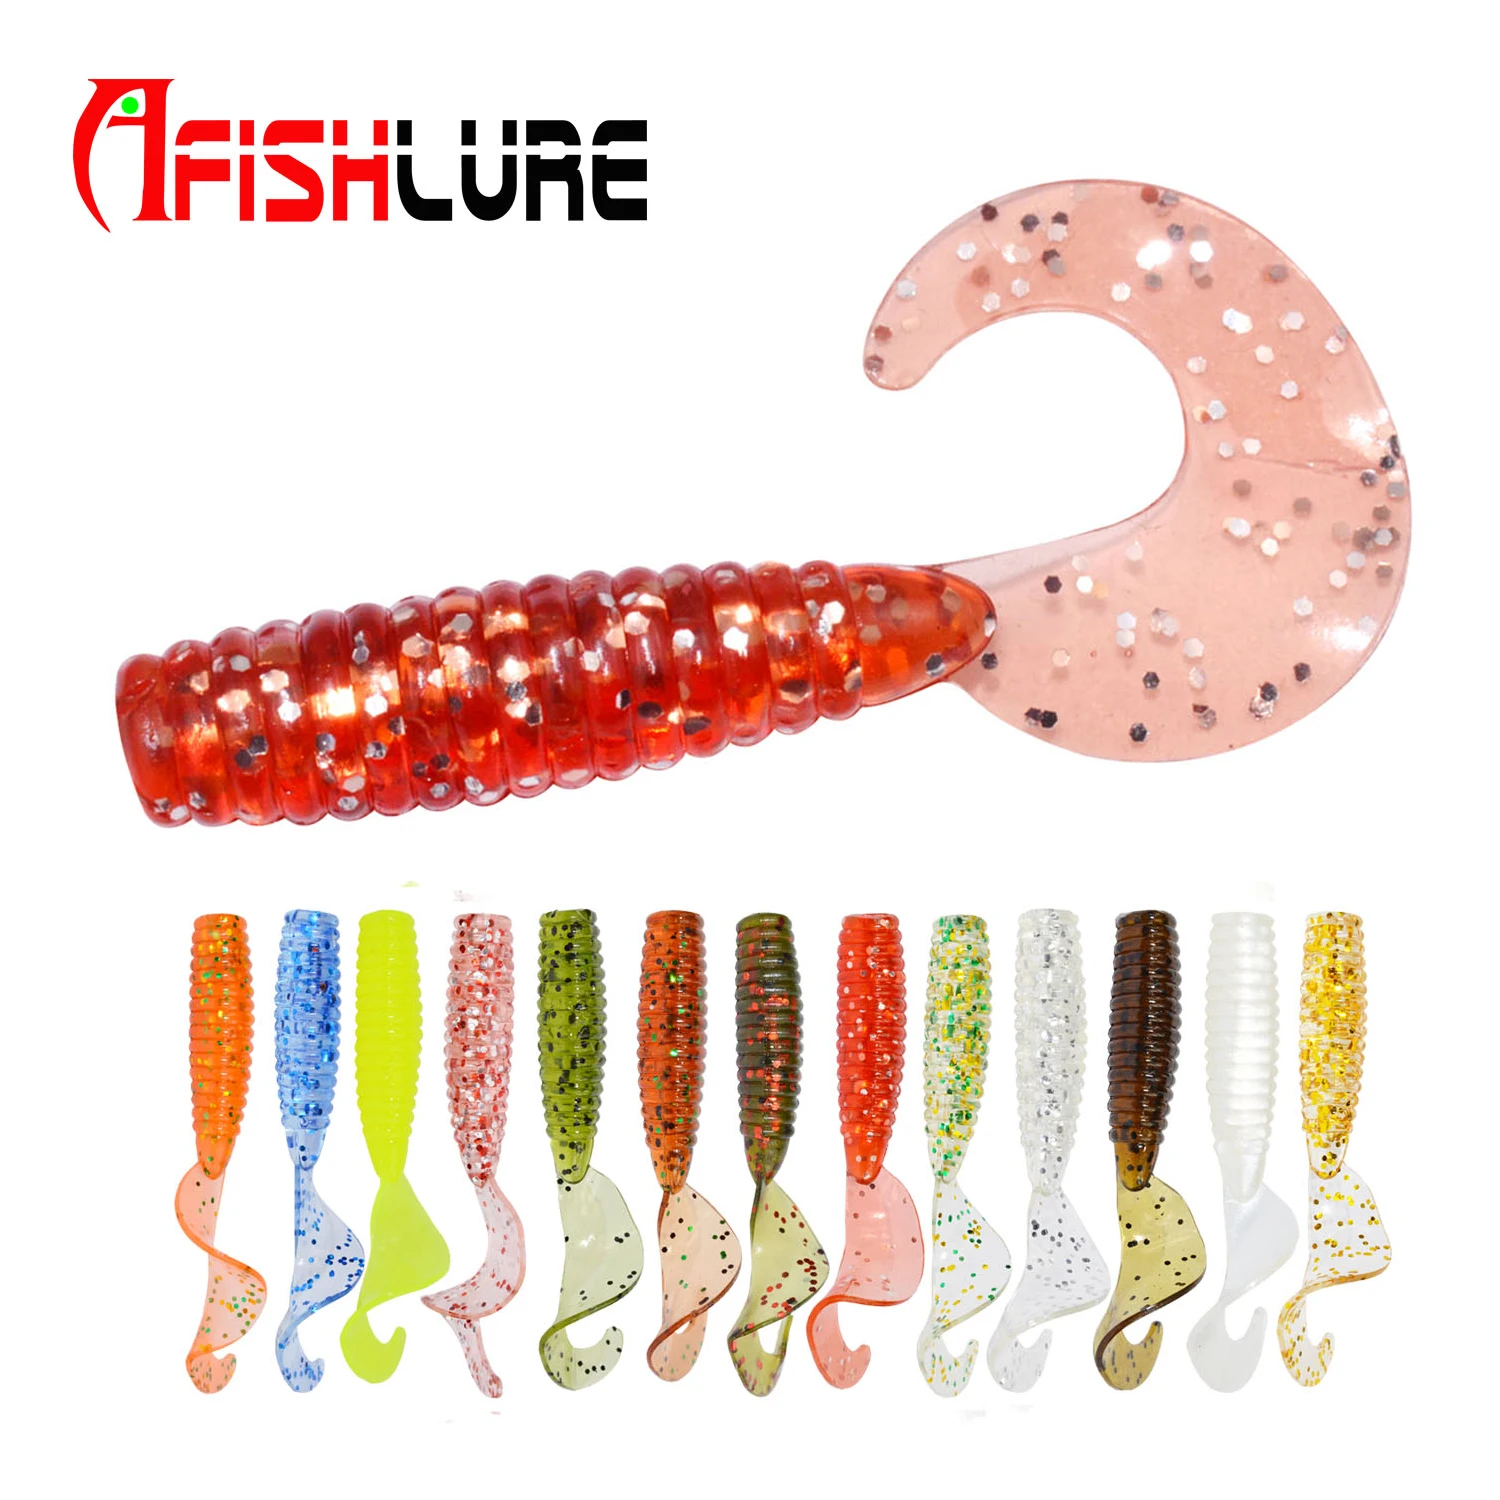 

Afishlure 45mm 1.2g Newbility vivid fish colors soft plastic grub baits OEM available curl worm fish bait, 14 colors